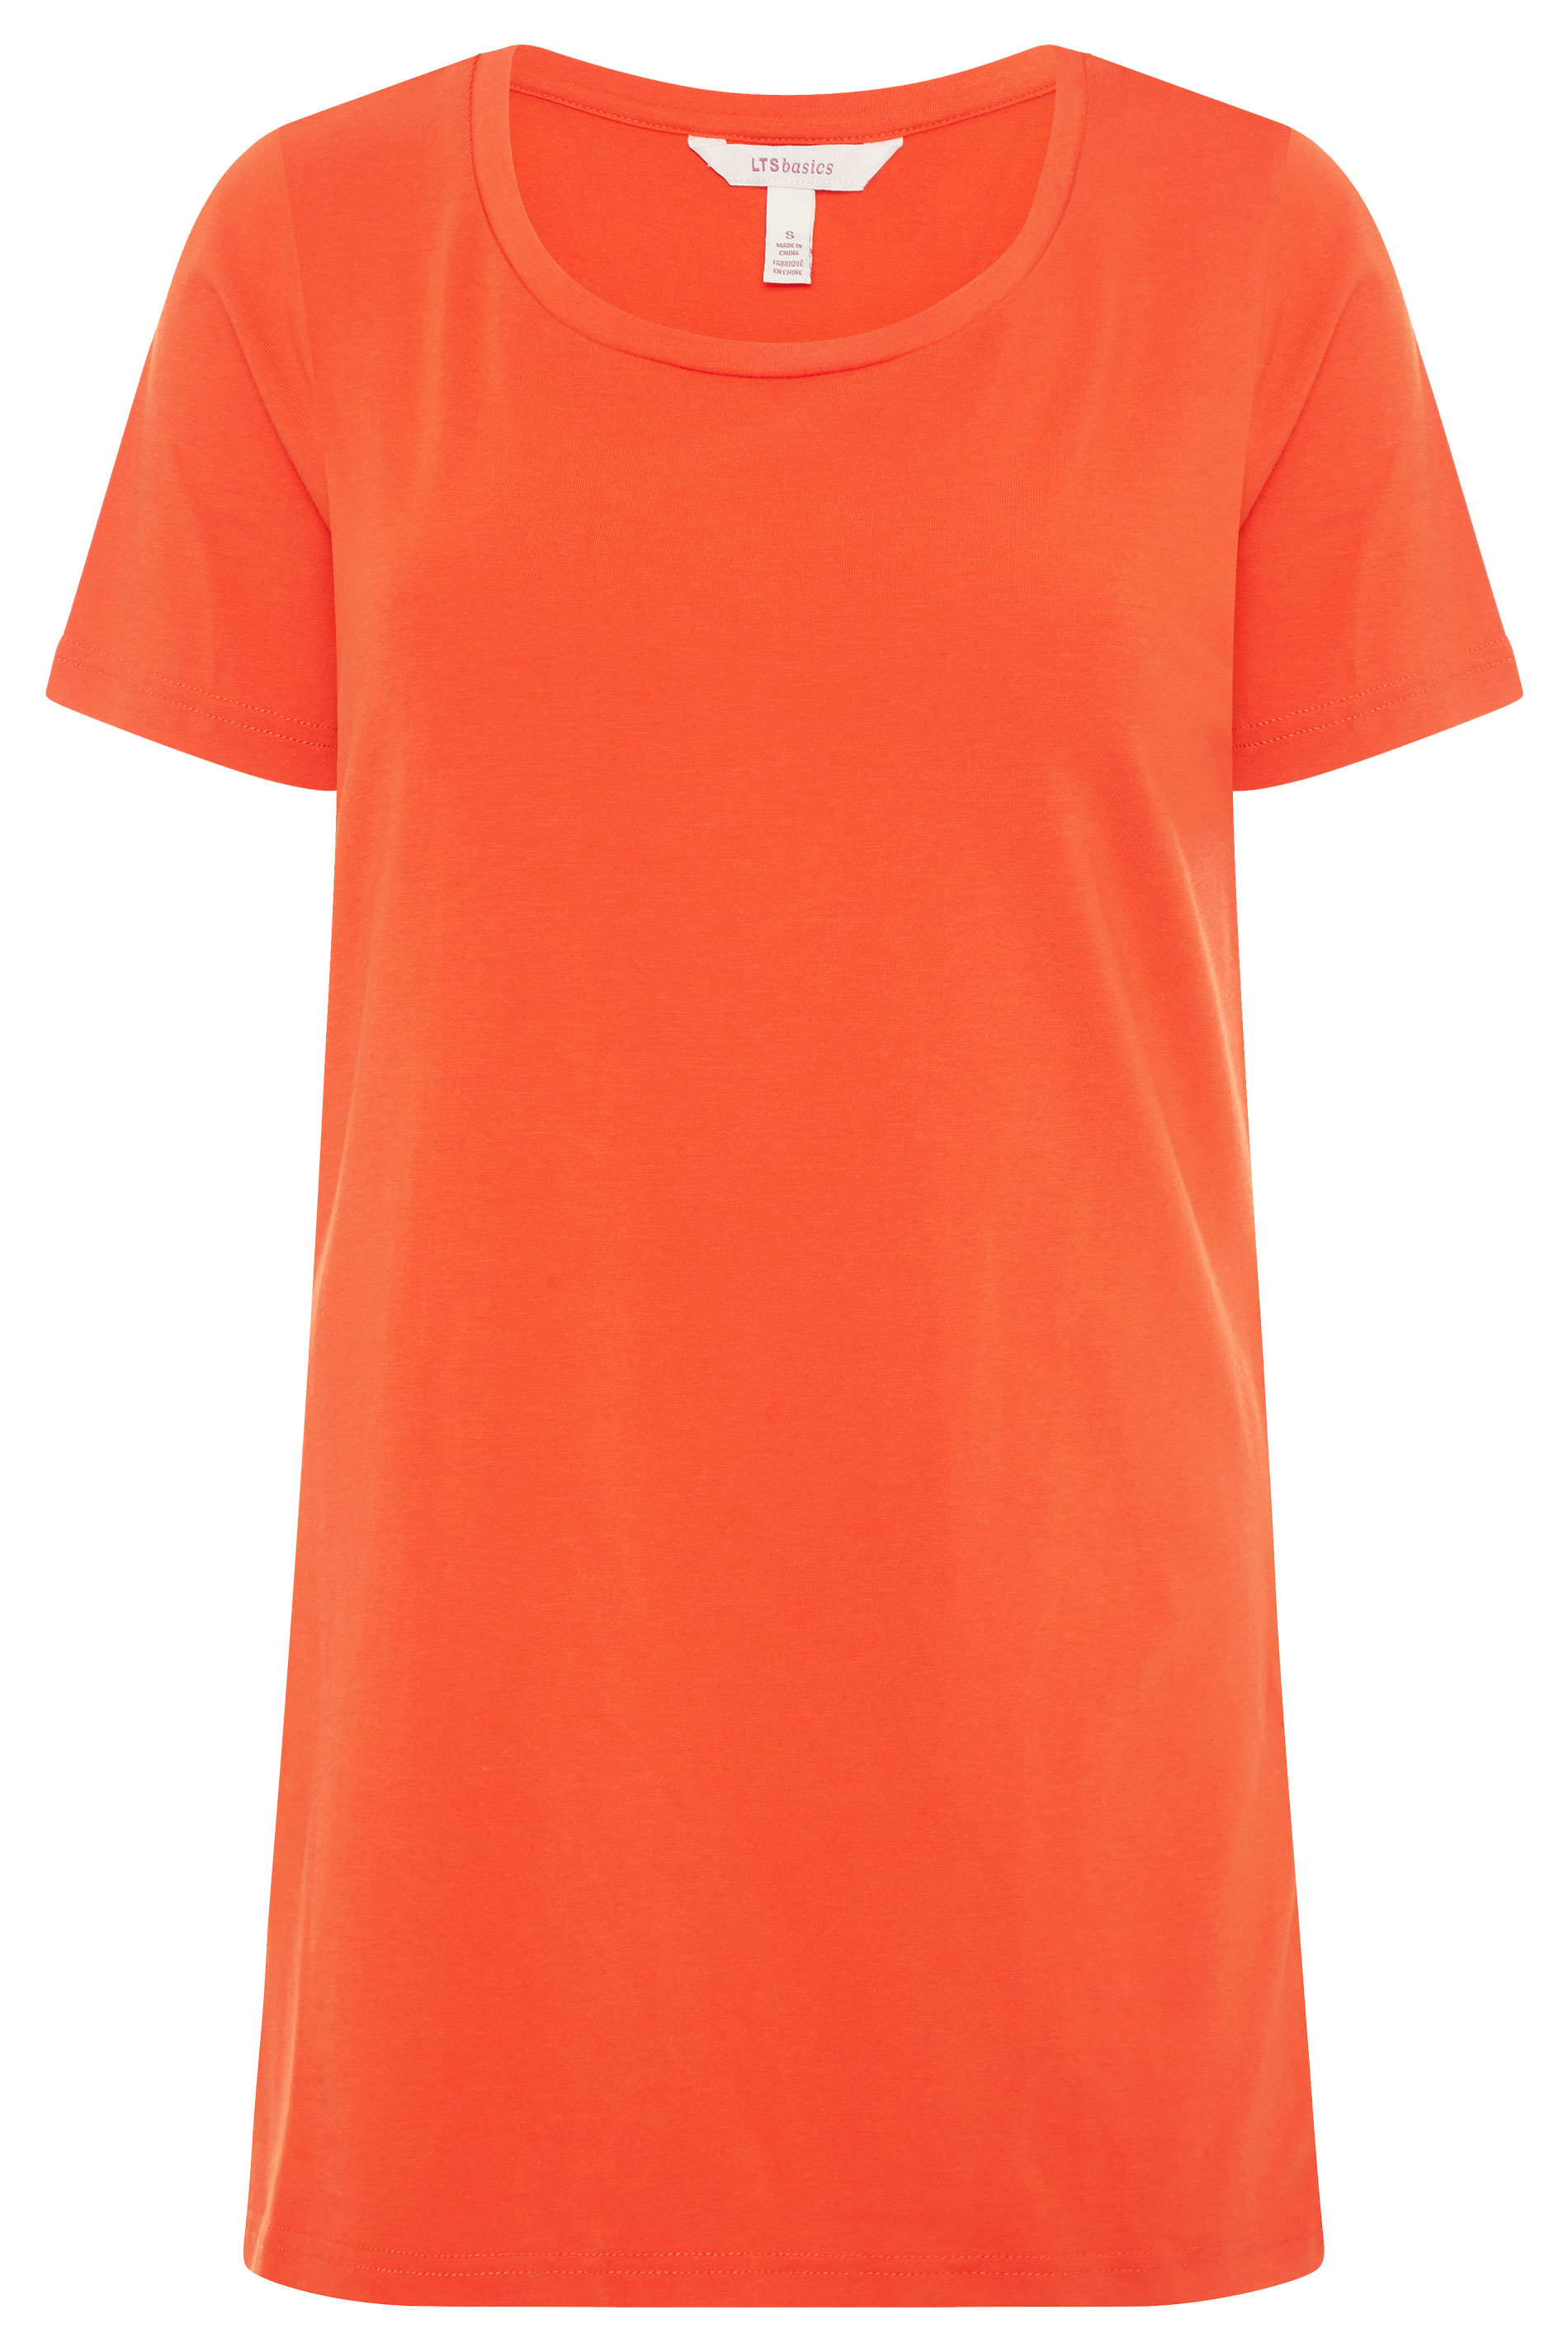 Orange Soft Feel Short Sleeve T-Shirt | Long Tall Sally